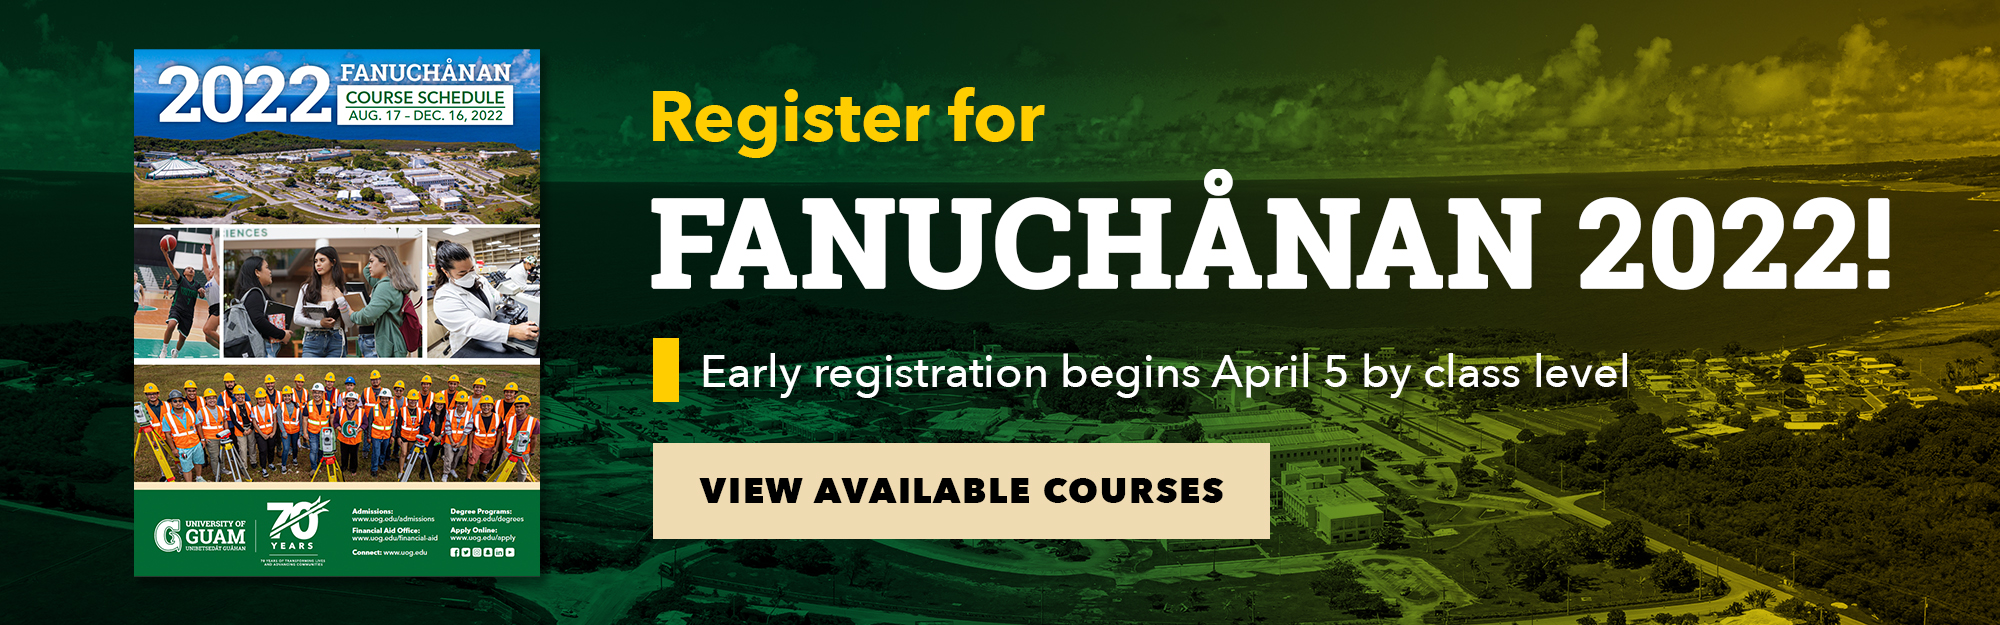 Register for Fanuchånan 2022! Early registration begins April 5 by class level